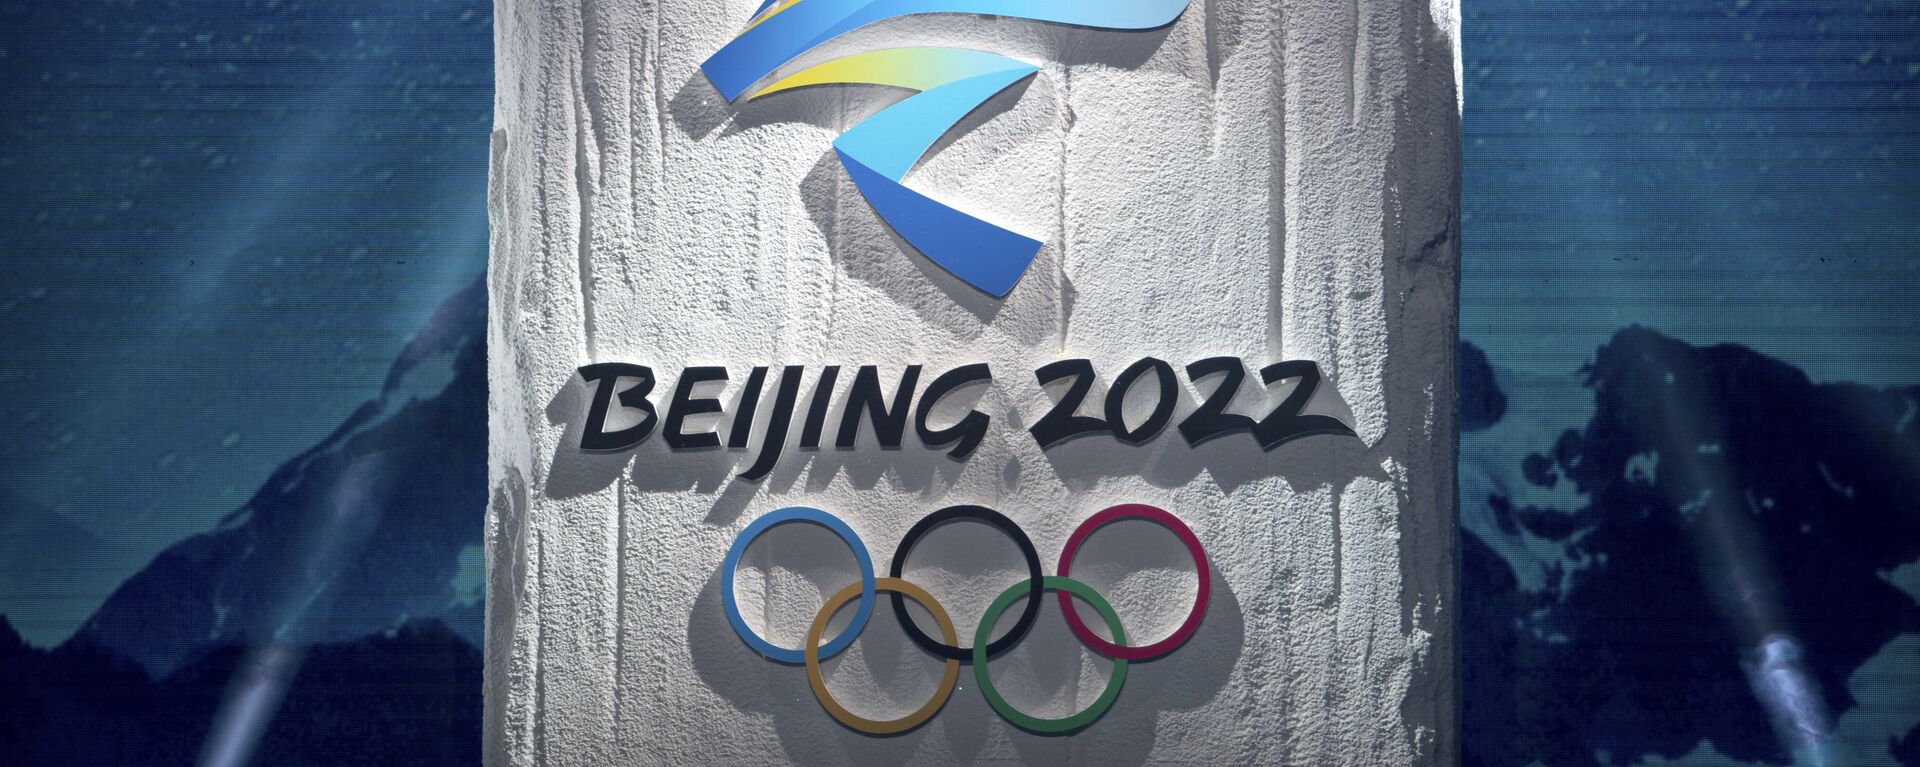 Logo de JJOO 2022 en Pekín - Sputnik Mundo, 1920, 06.12.2021